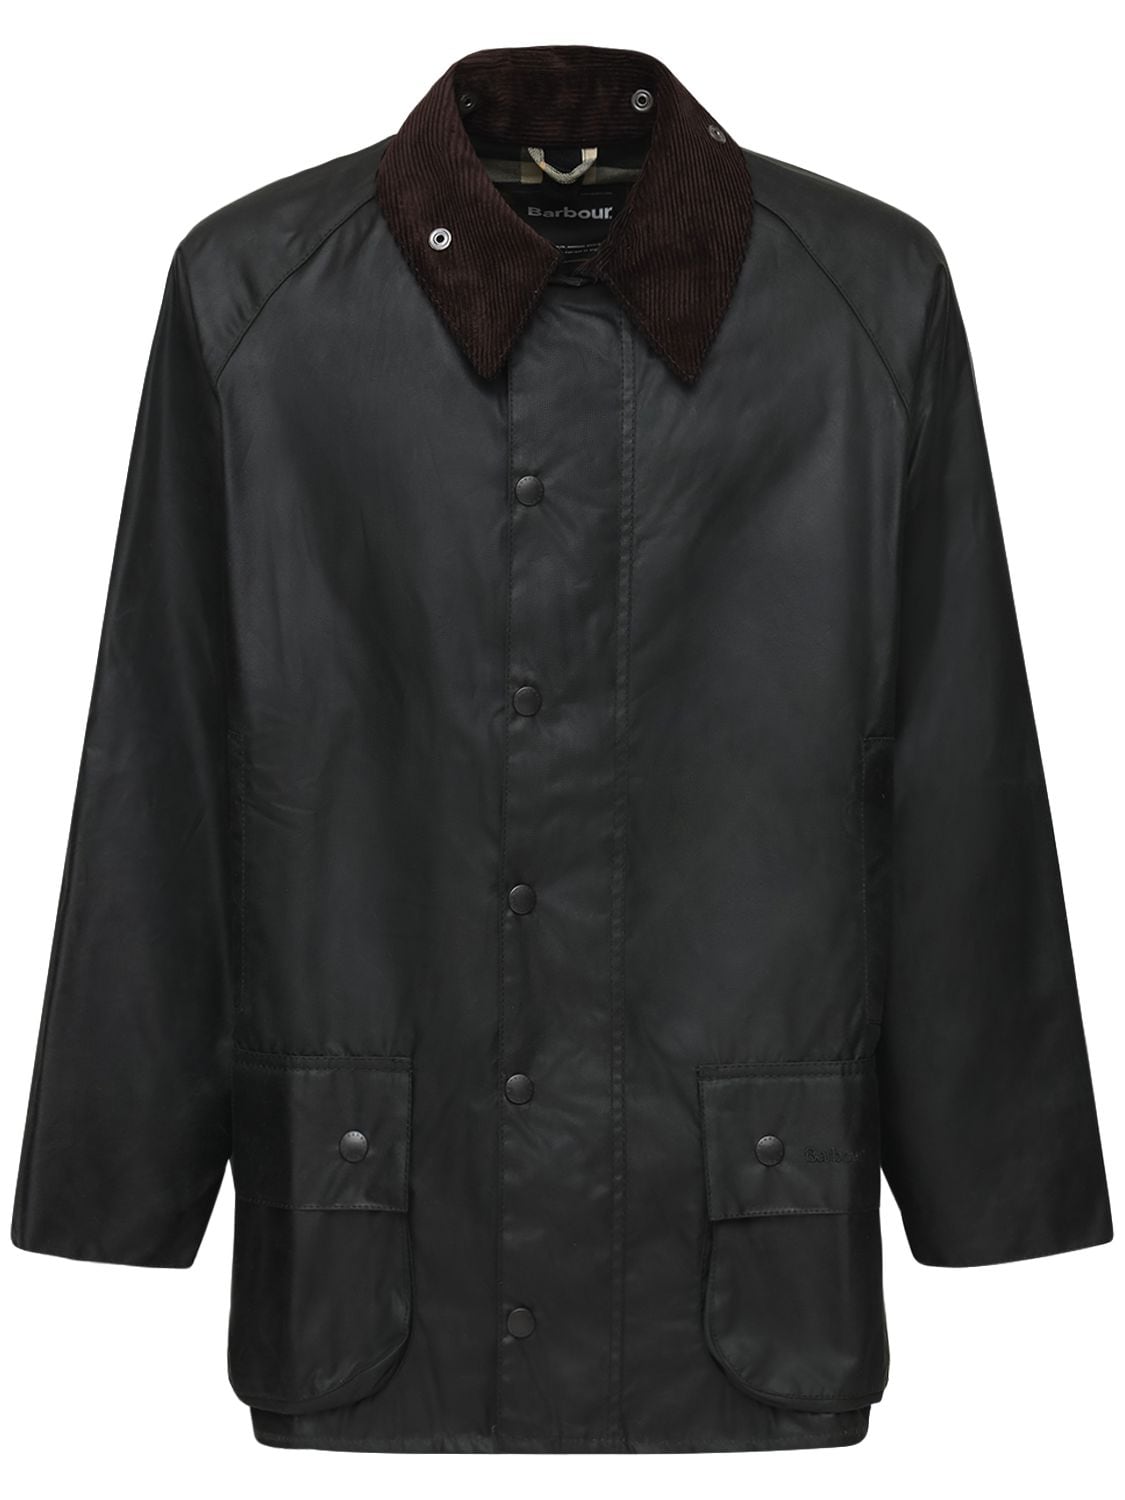 Beaufort Waxed Cotton Jacket